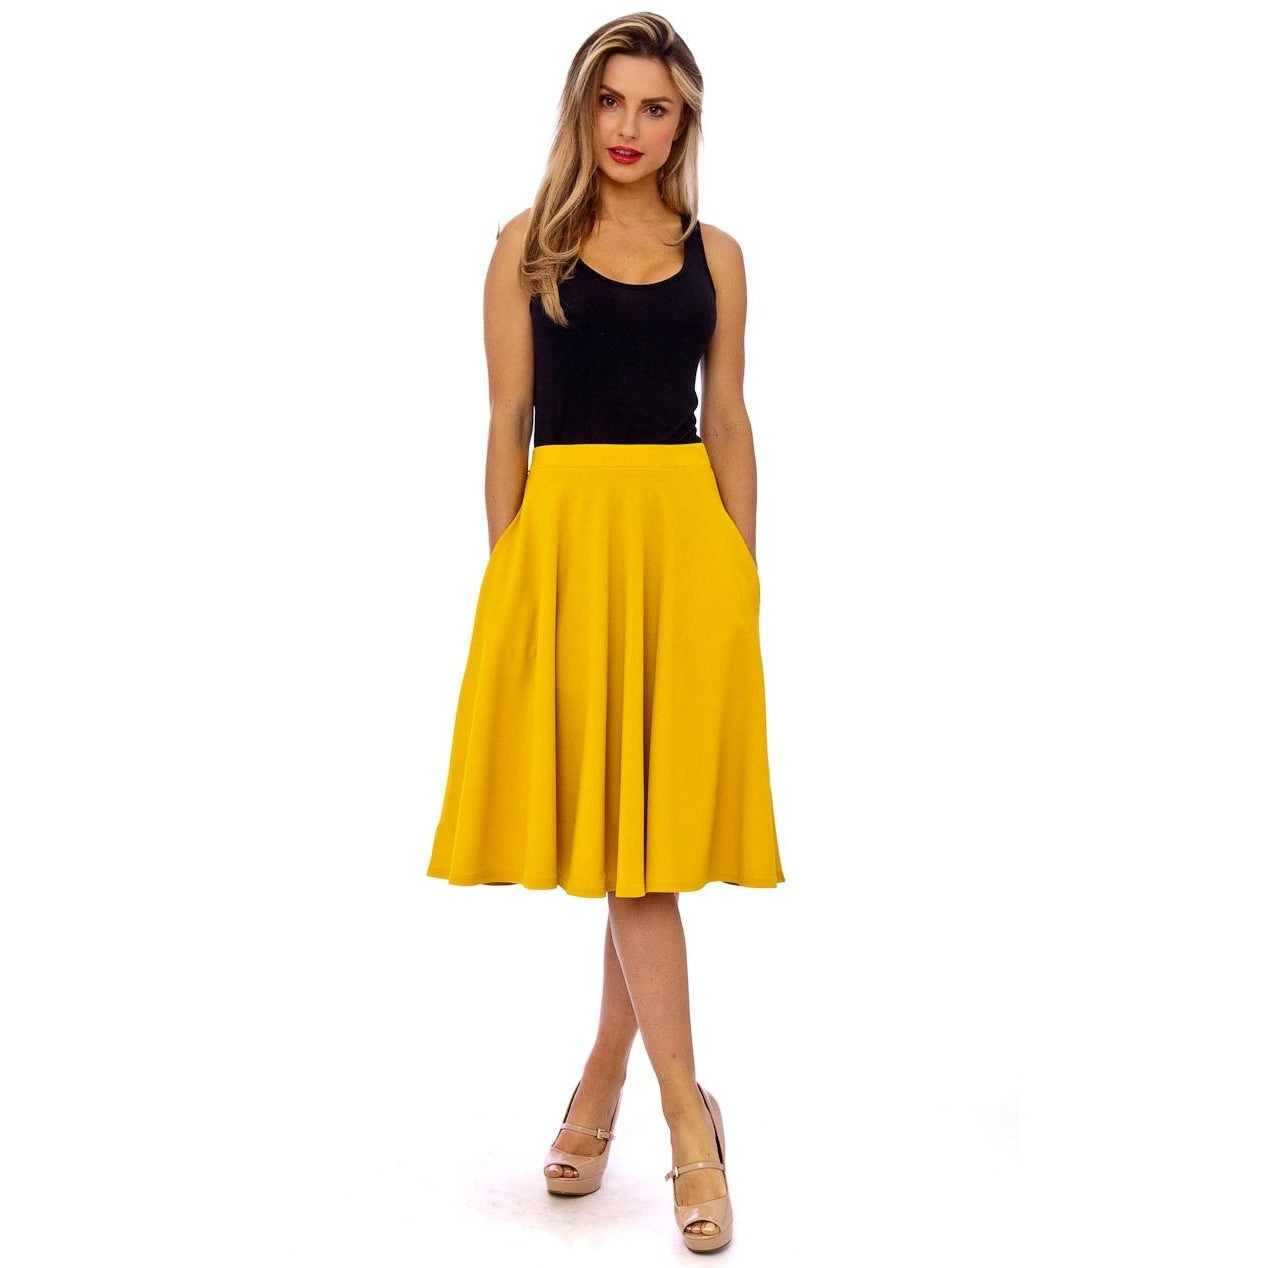 Honey Yellow 1950s Vintage Rockabilly Swing Skirt